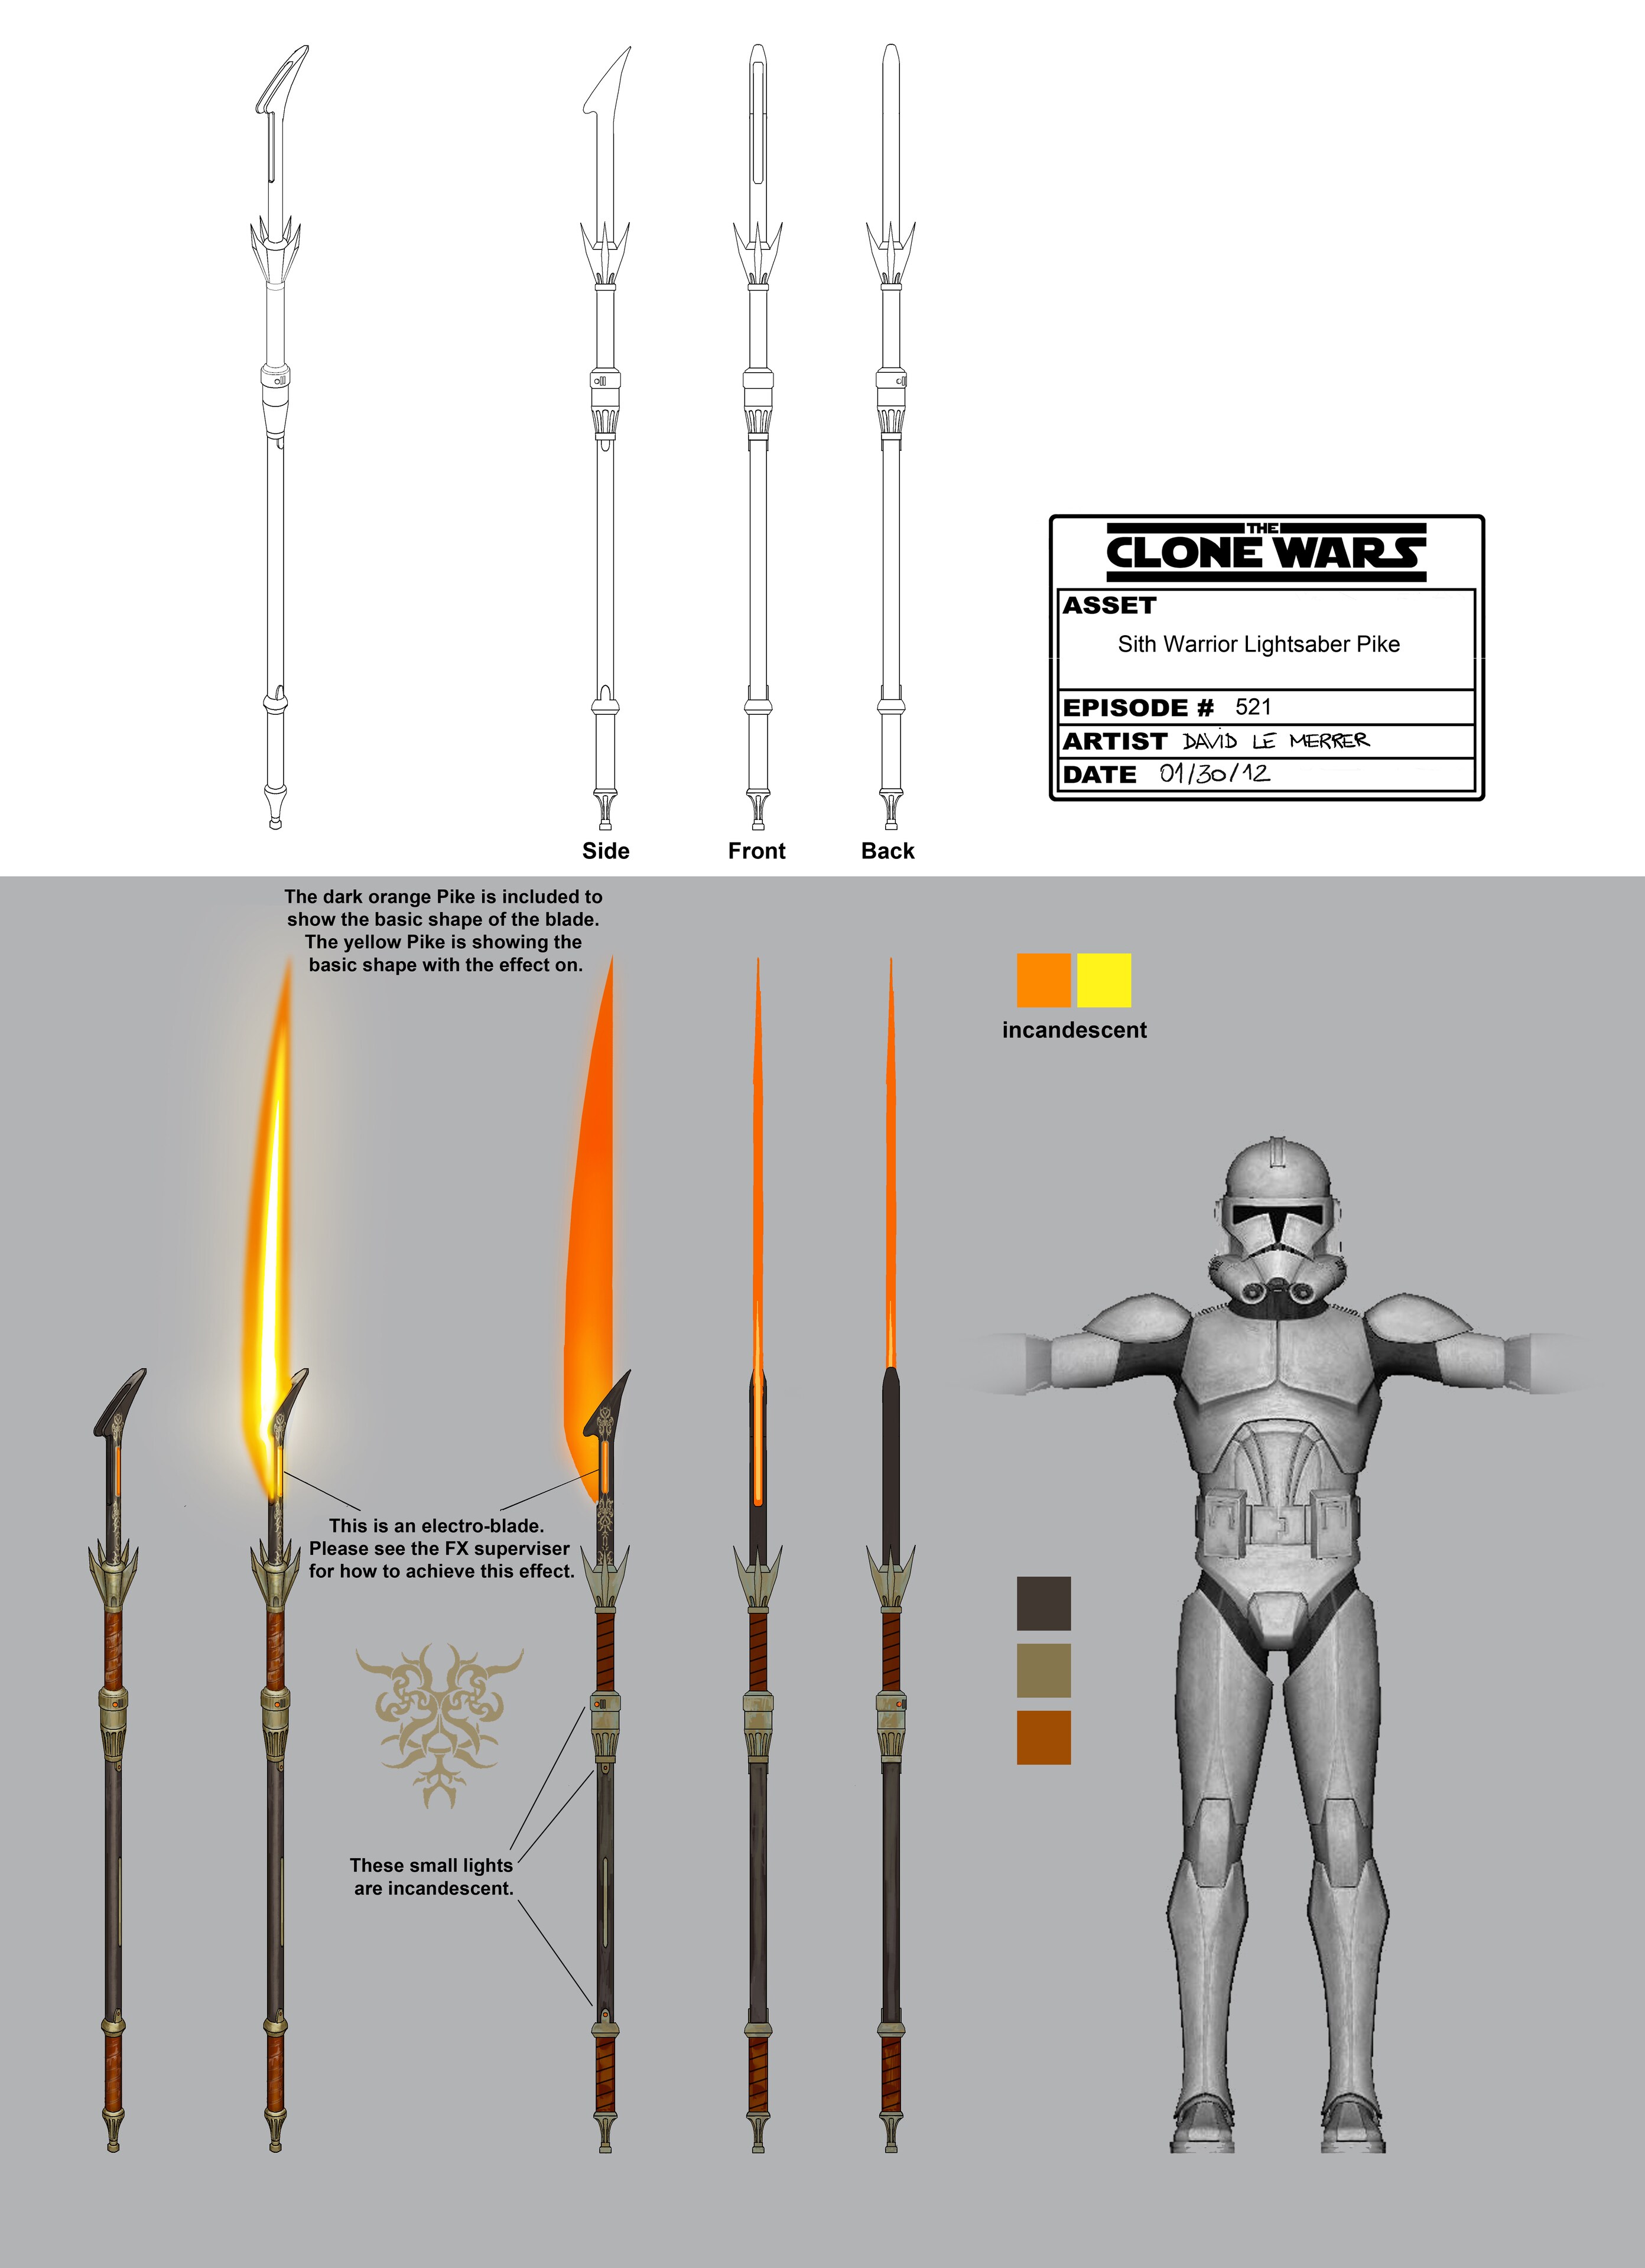 Moraband Sith lightsaber pike illustration by David Le Merrer (dated January 30, 2012).

